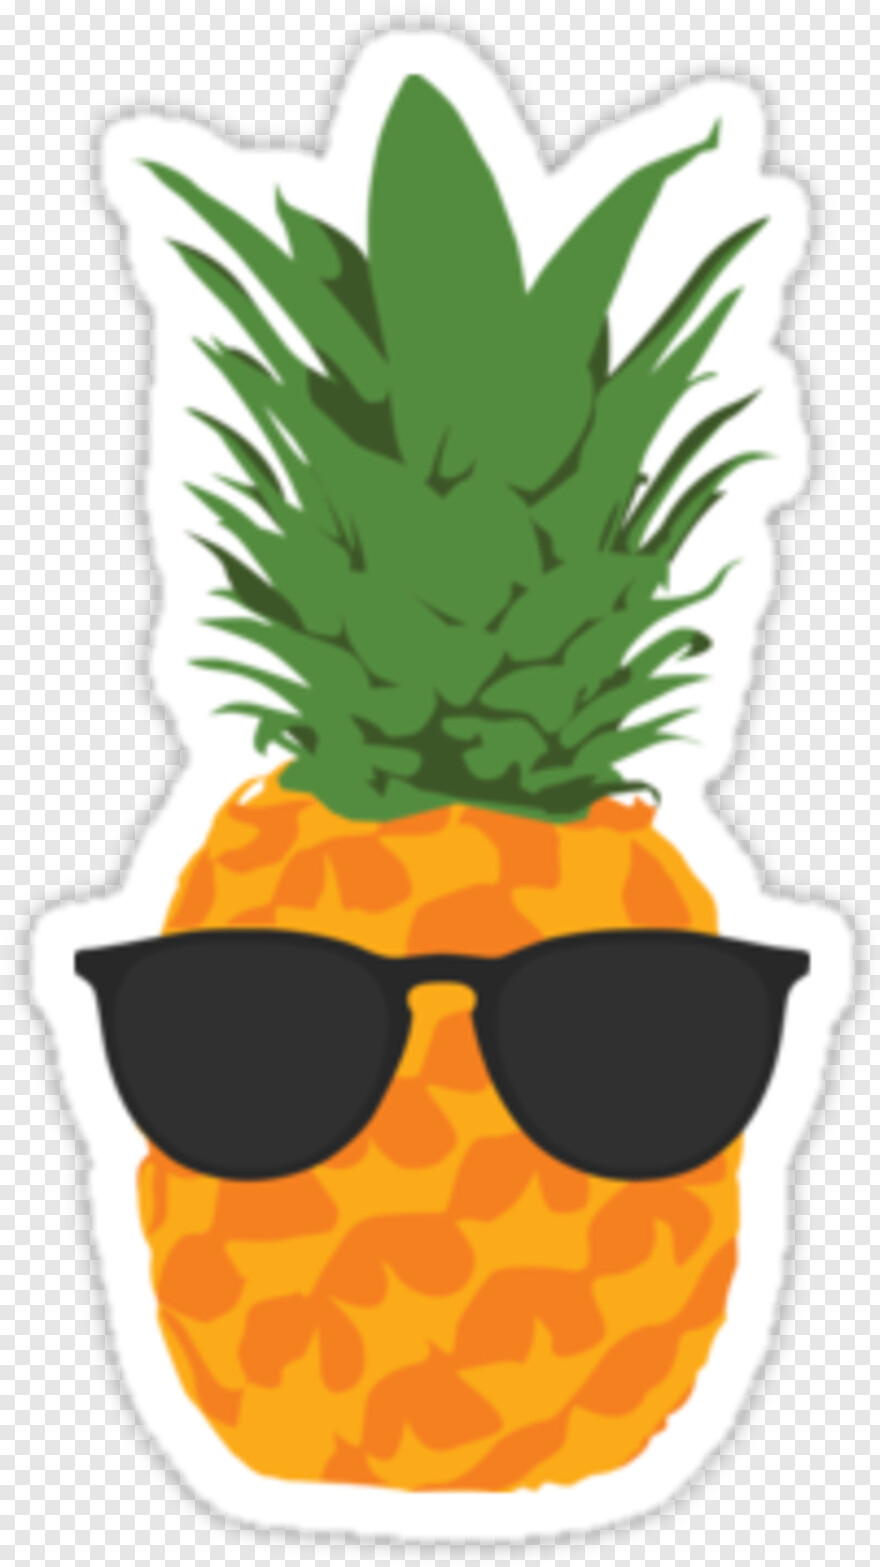 pineapple # 654173